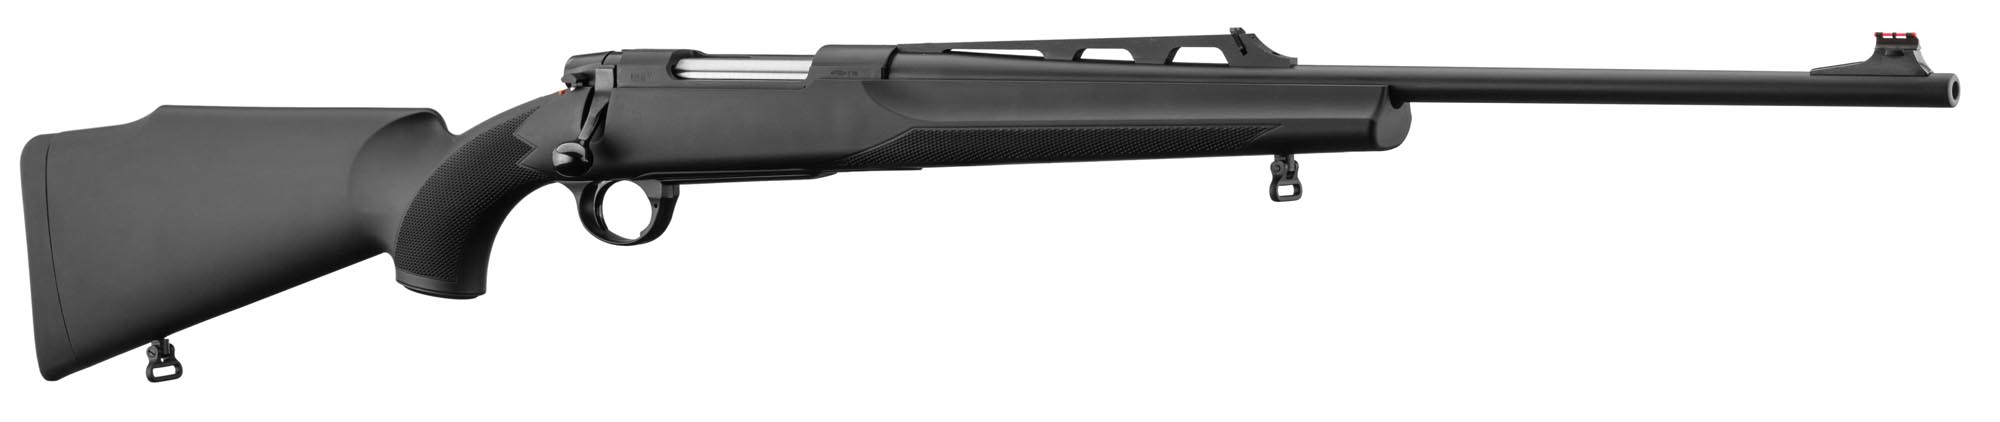 carabine-bp900-renato-baldi